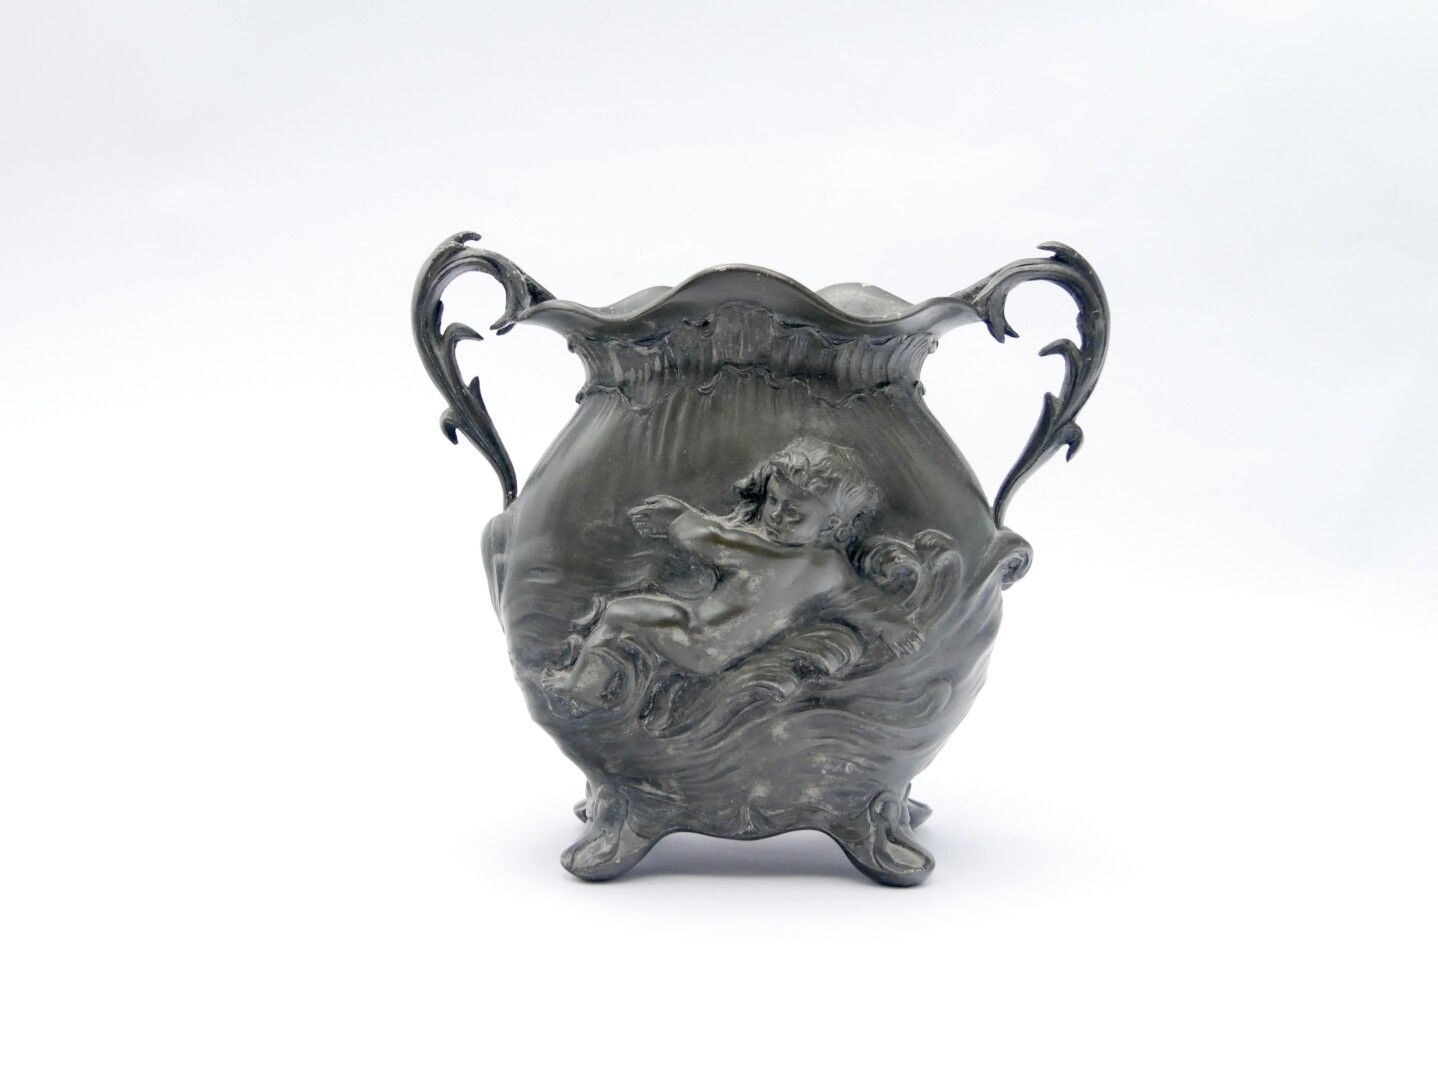 Null 让-莫里斯和埃米尔-佩蒂宗 - 约1900年

锡镴花瓶，扁平的瓶身上有浮雕装饰的波浪中的普蒂。

签名：Petiz

H.18 cm. 7 in.
&hellip;